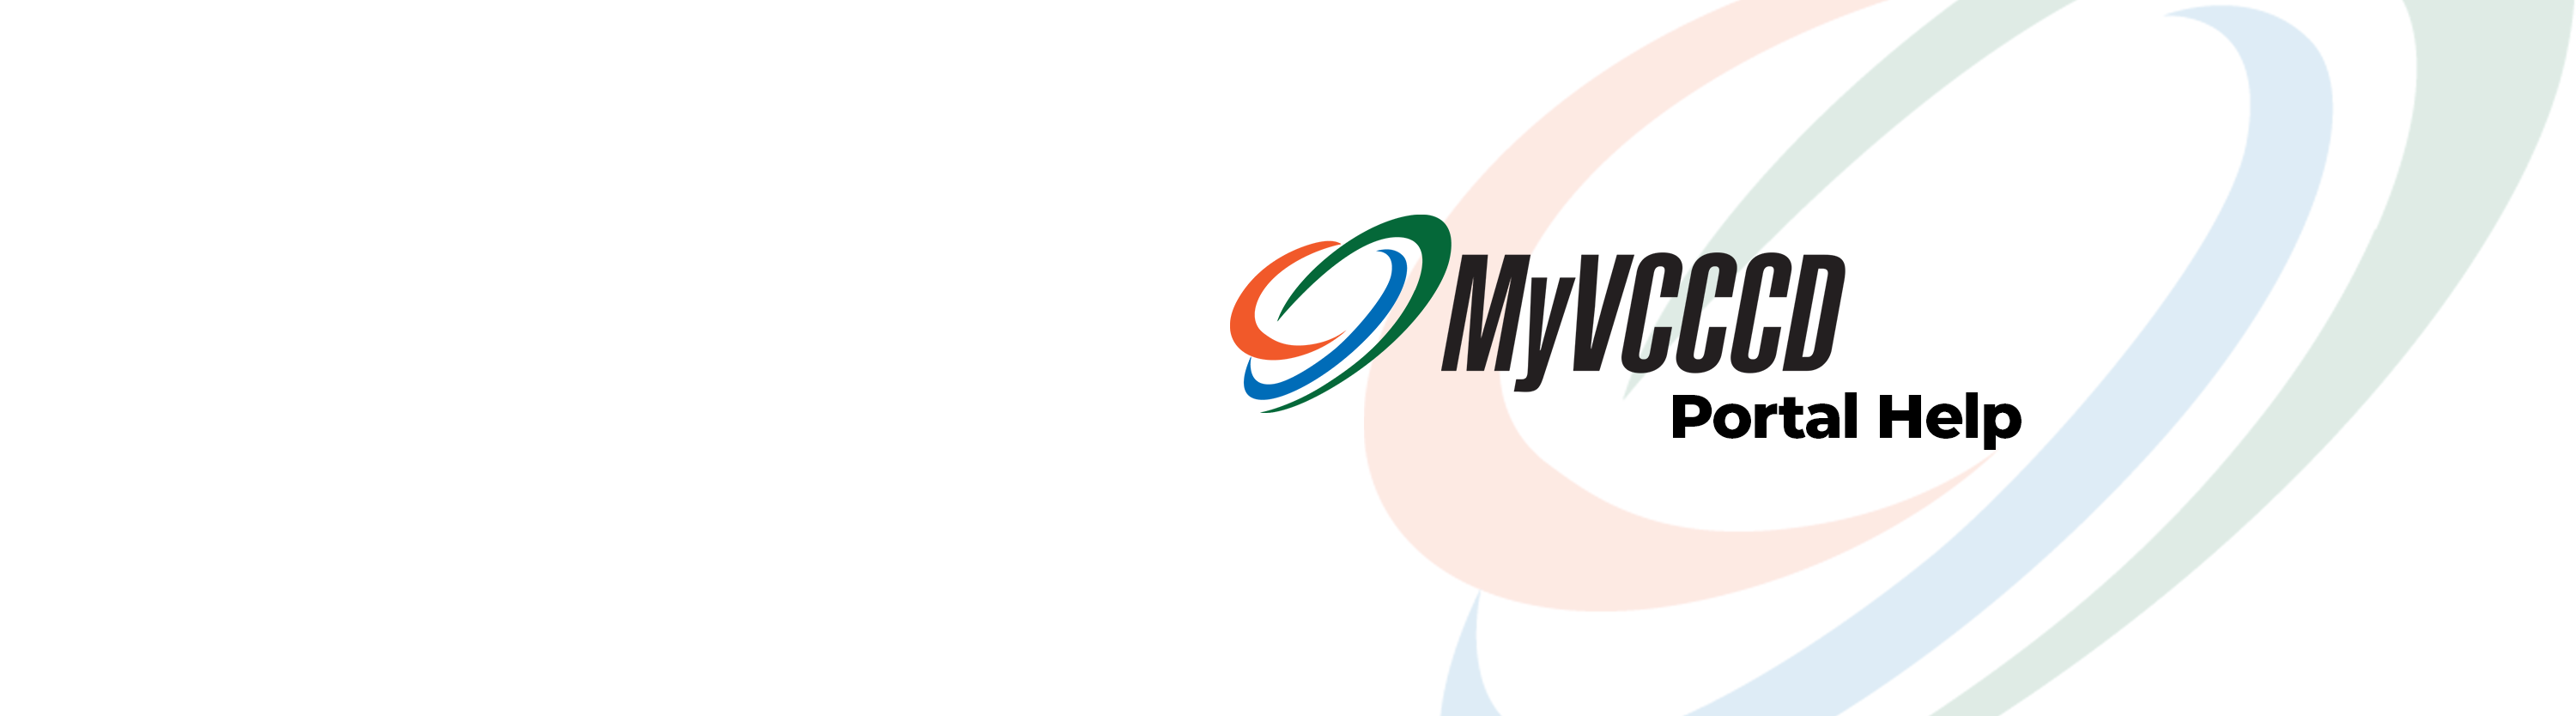 MyVCCCD Portal Help